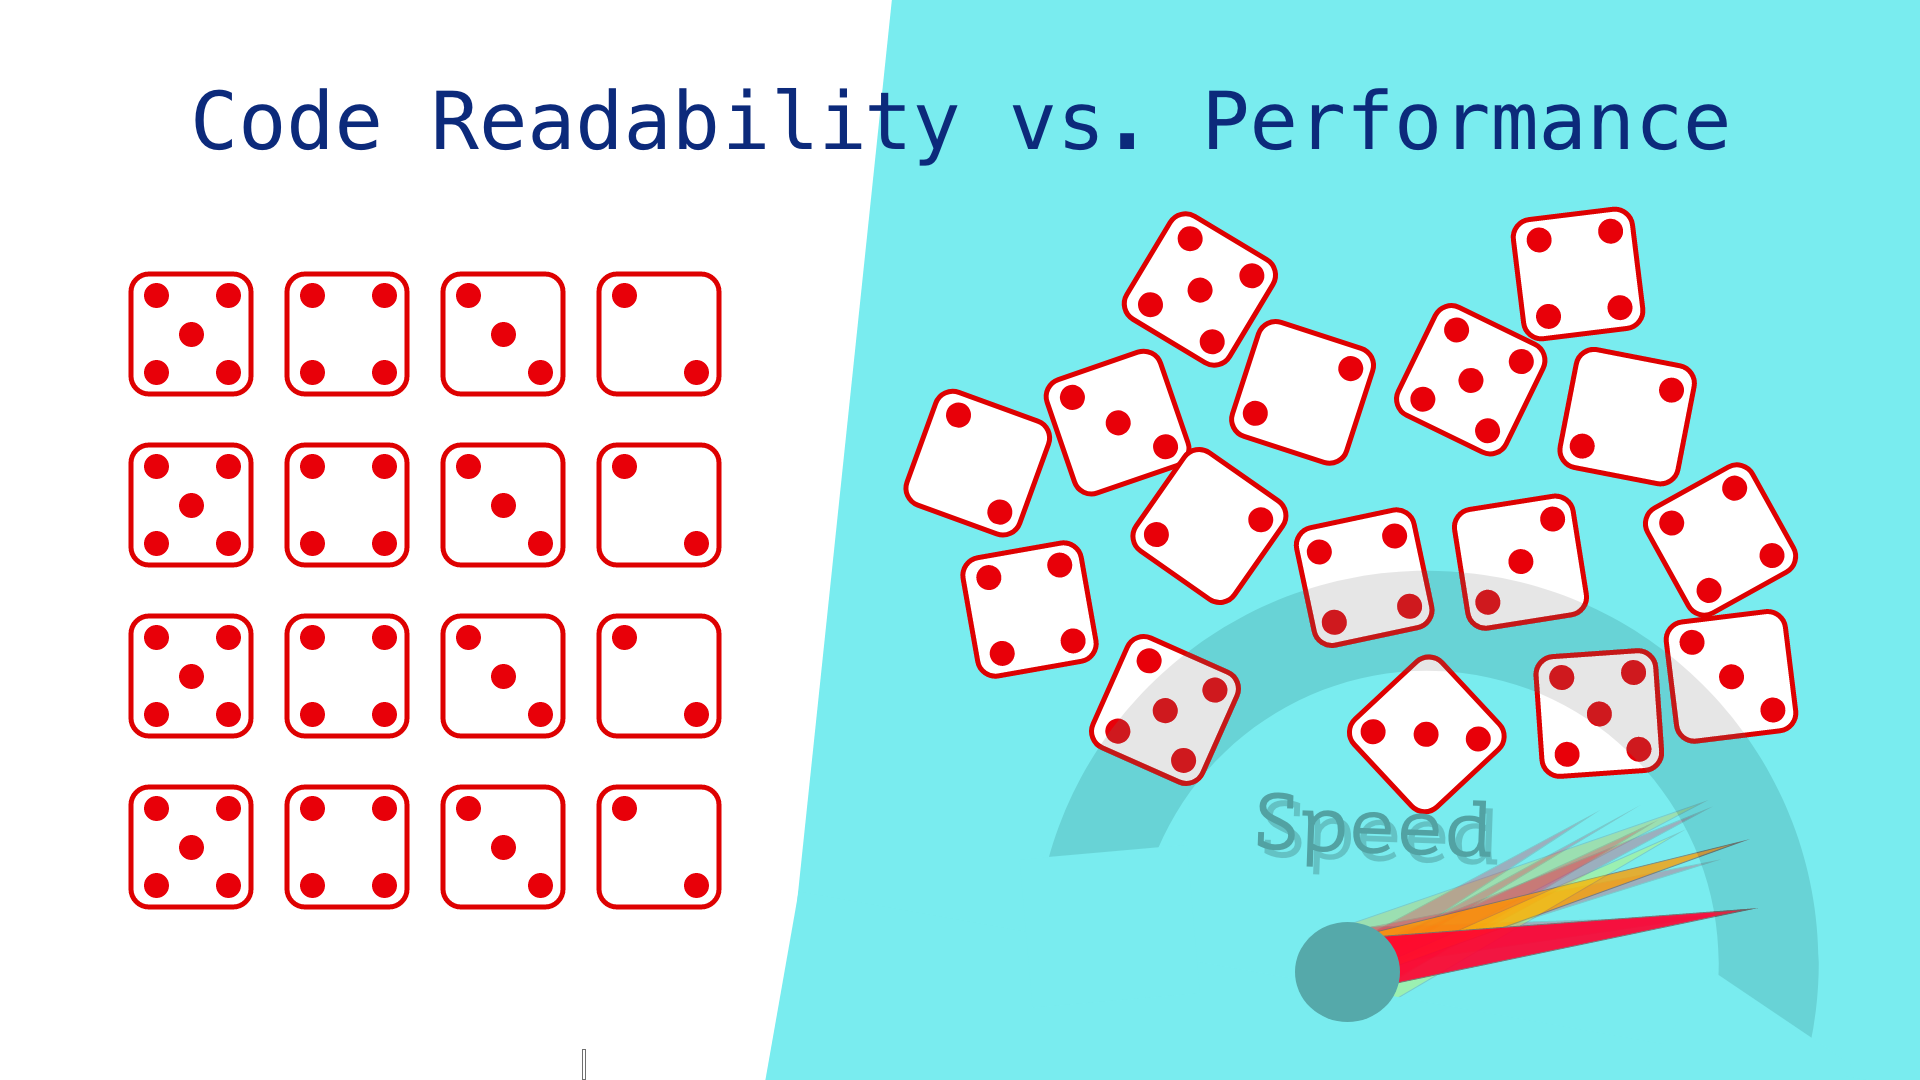 Code Readability vs. Performance